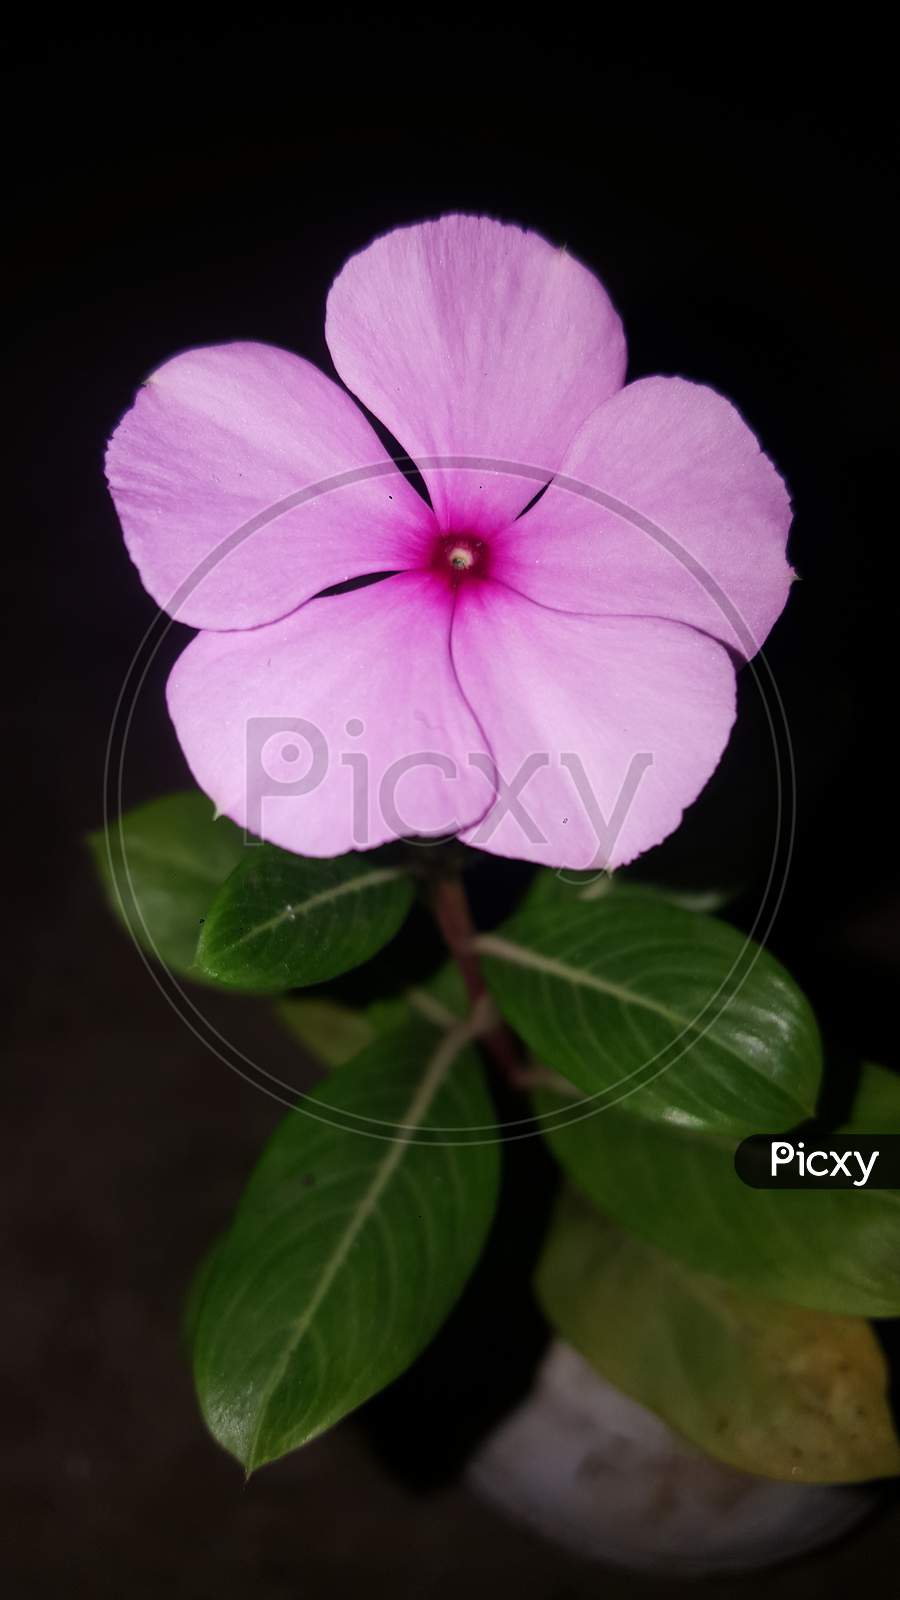 Madagascar Periwinkle flower, beautiful madagascar periwinkle flower night click photo